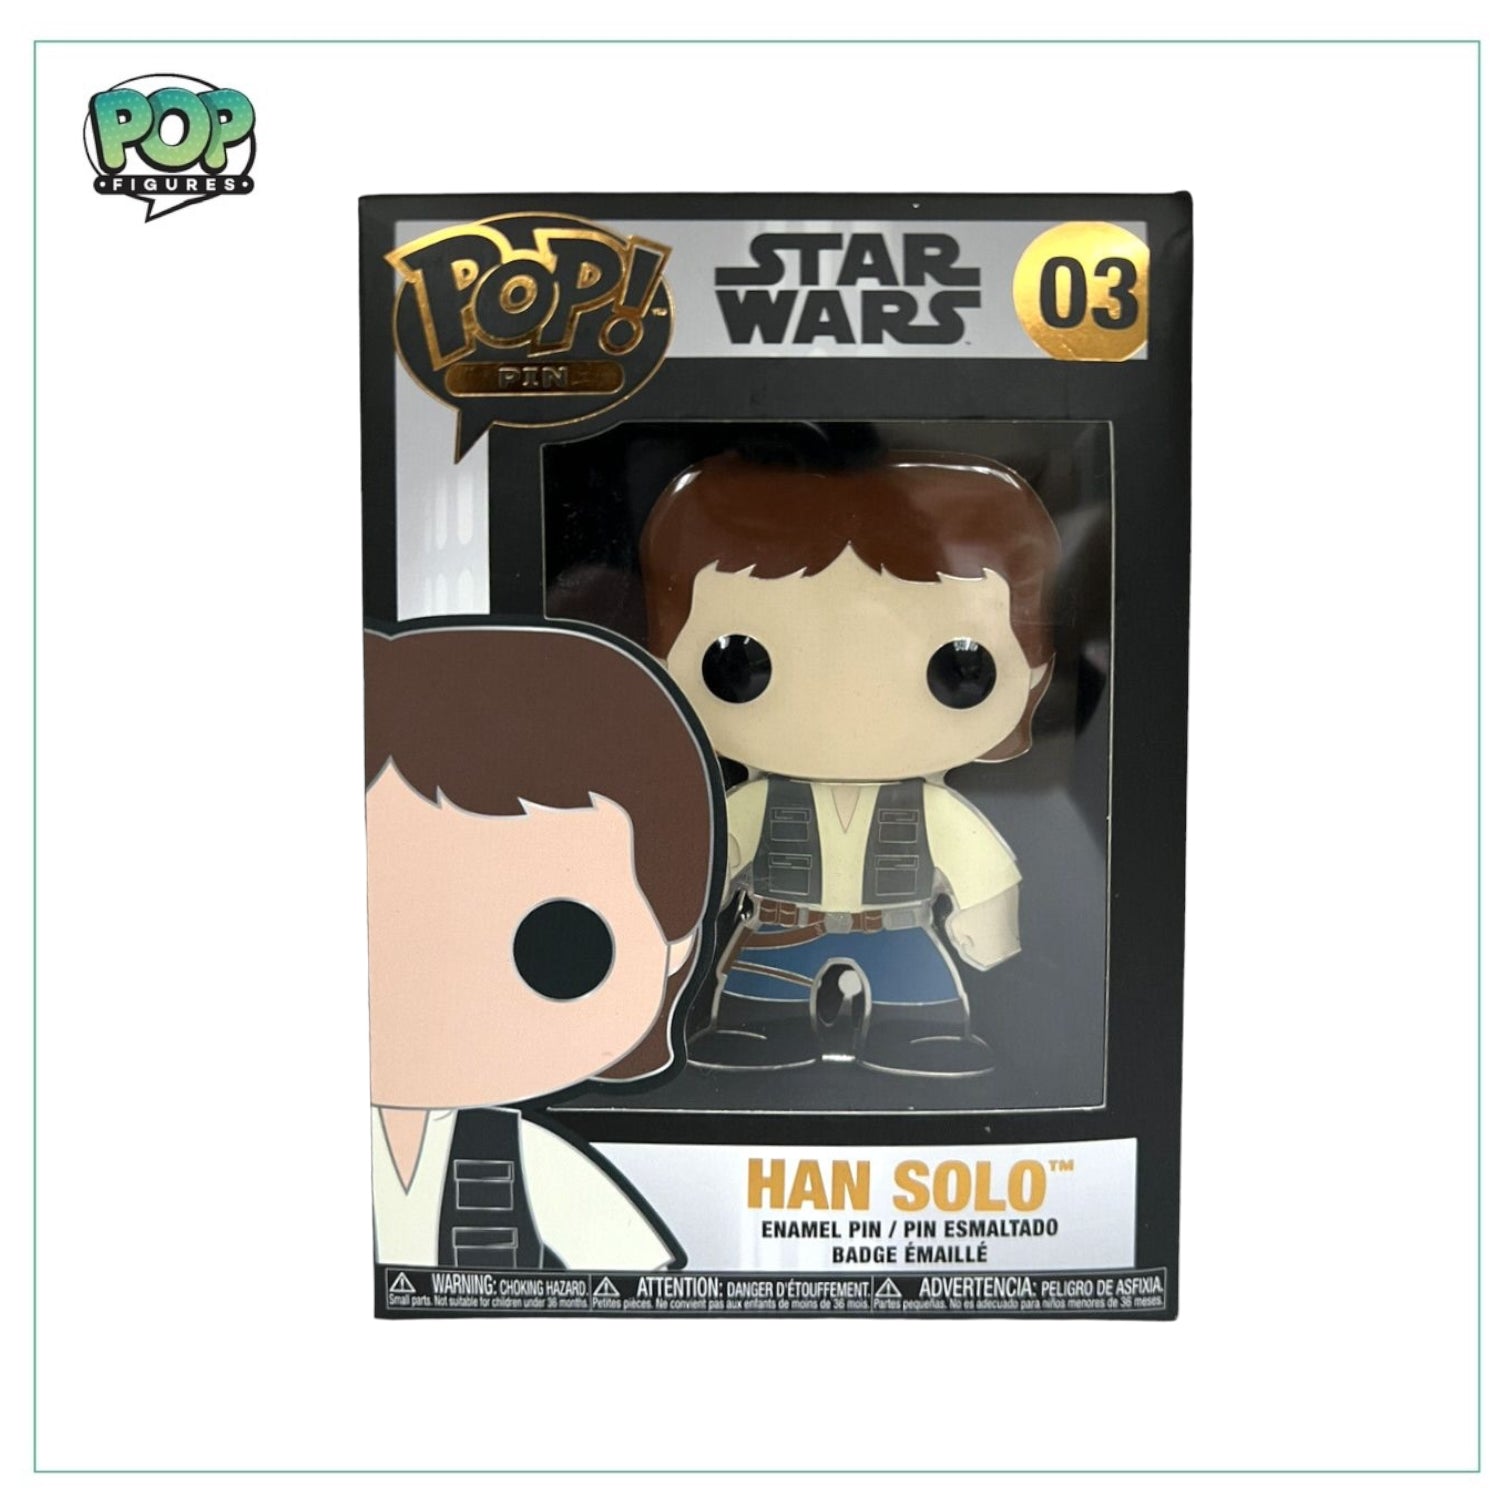 Han Solo #03 Funko Pop Pin! - Star Wars